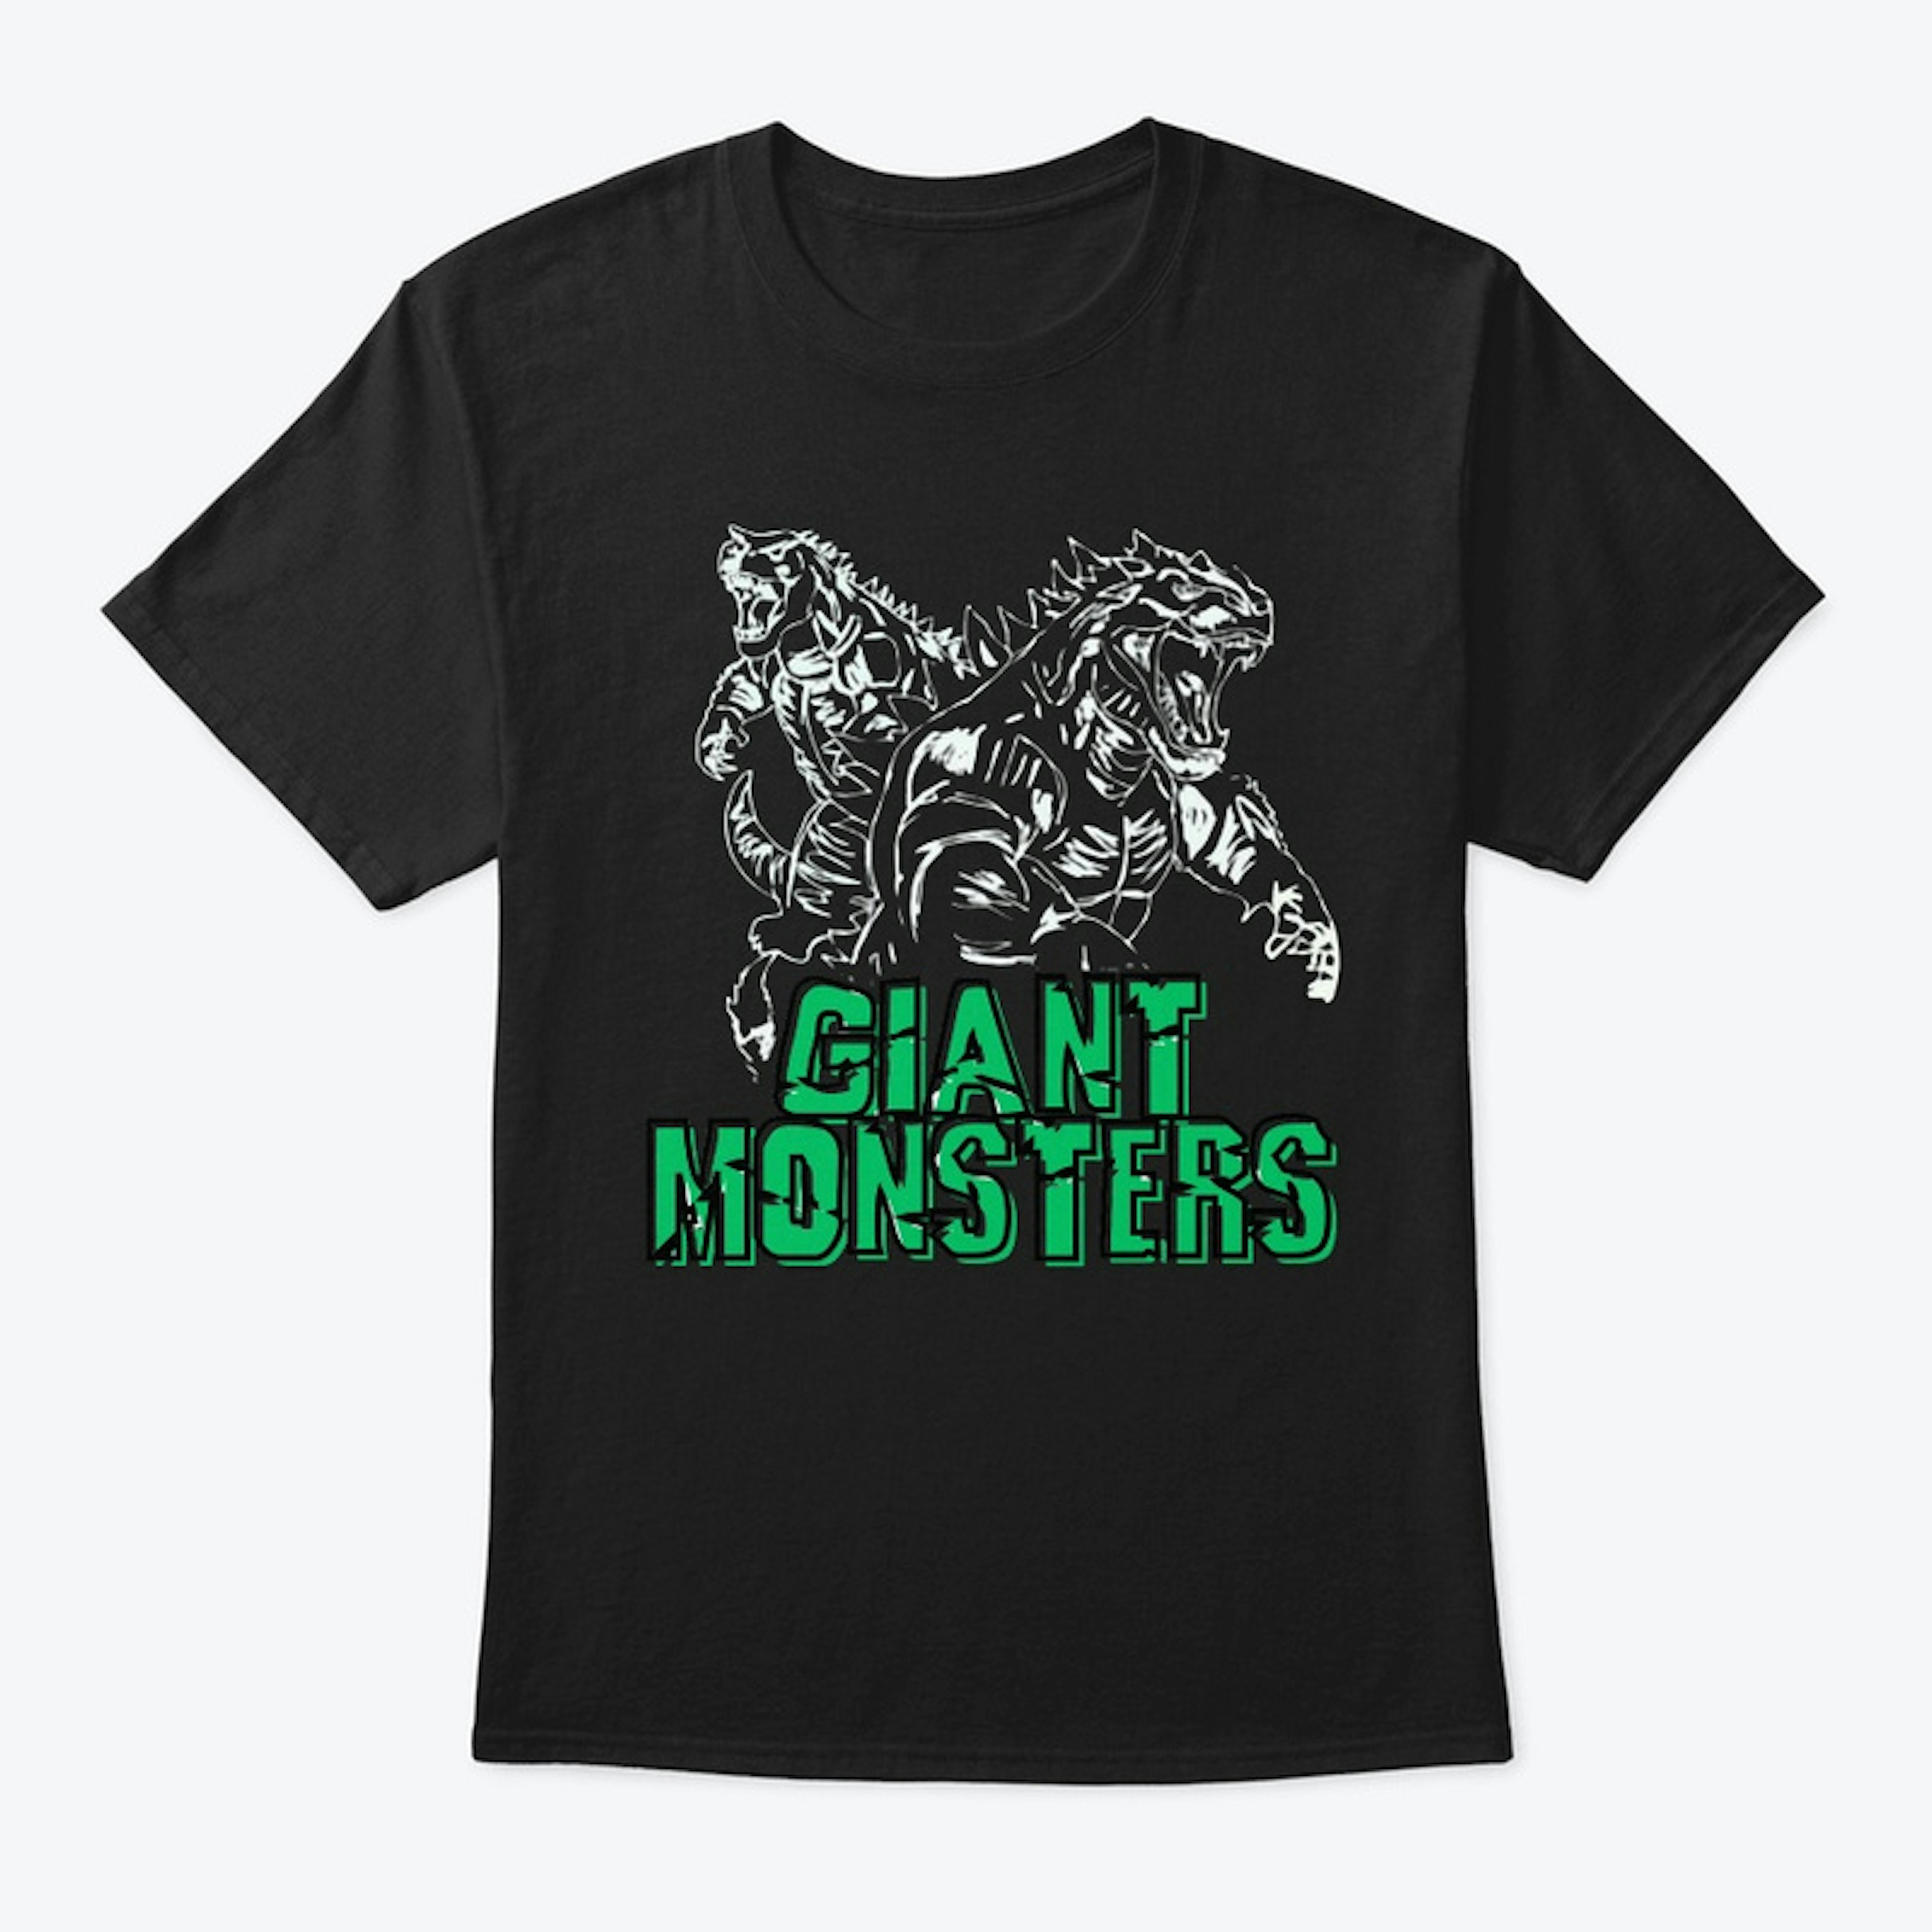 Giant Monsters Tee